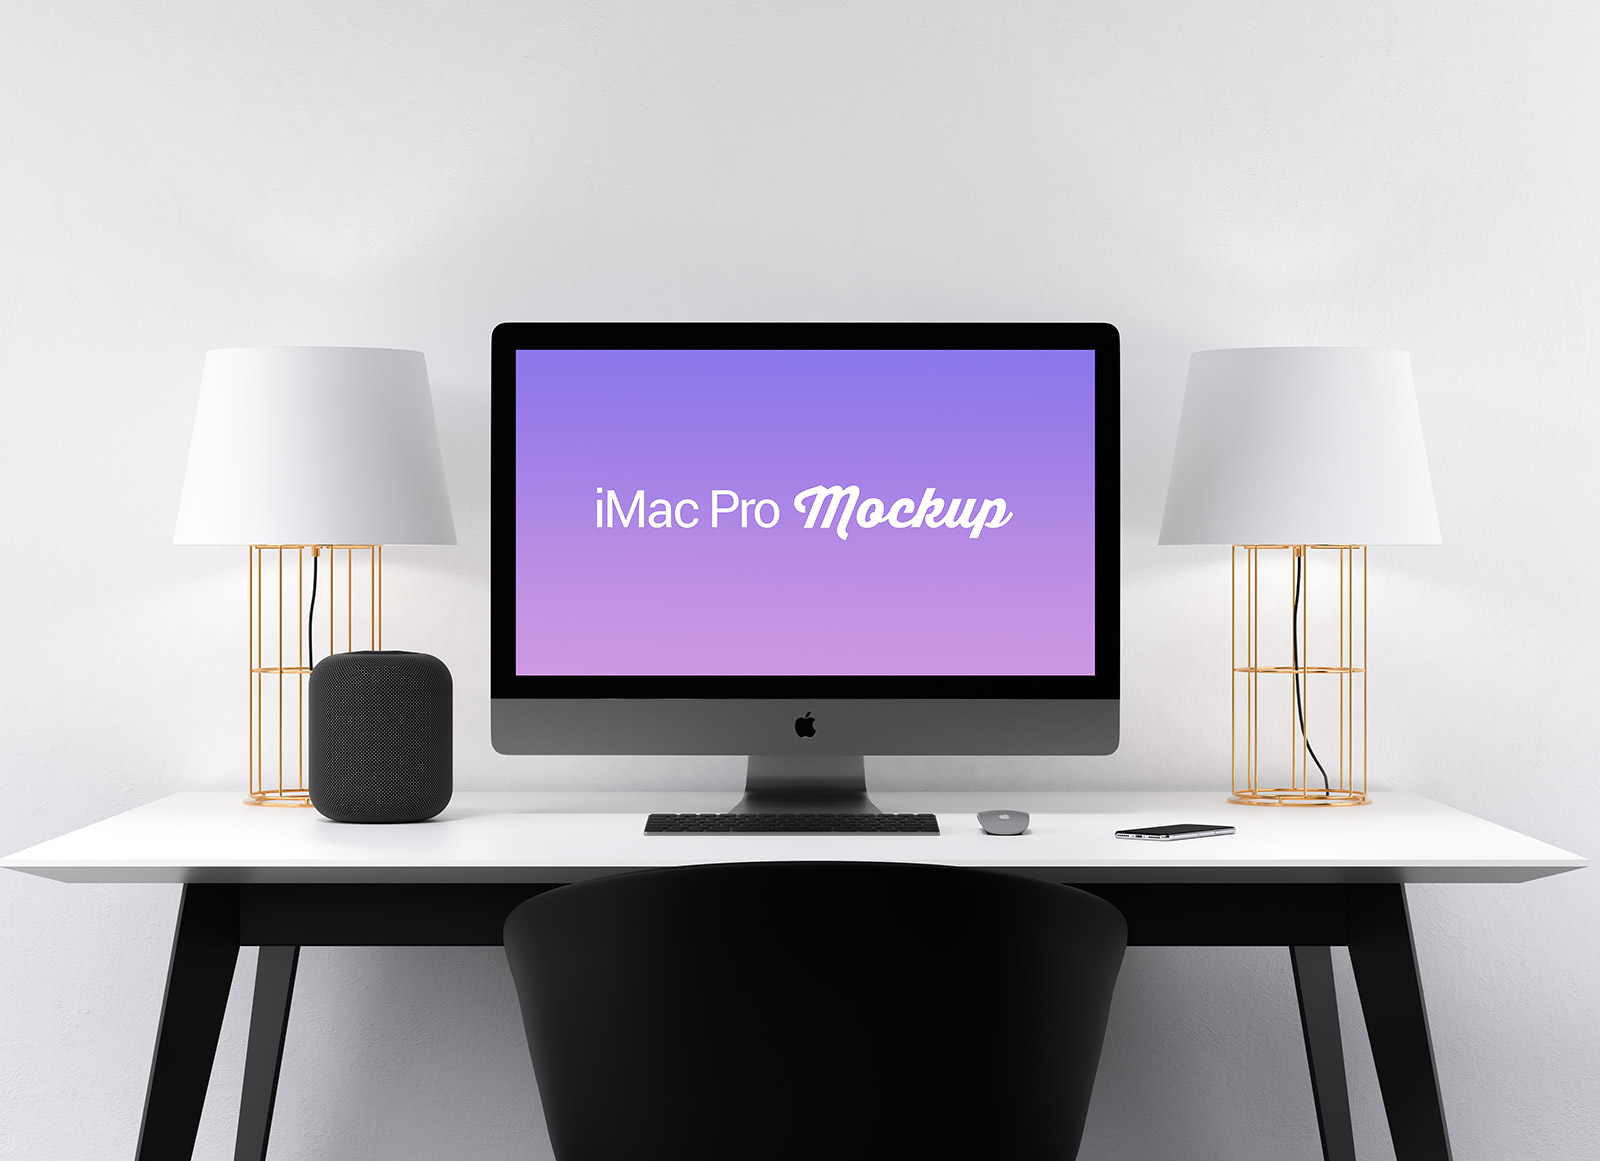 Maqueta moderna de manzana iMac Pro